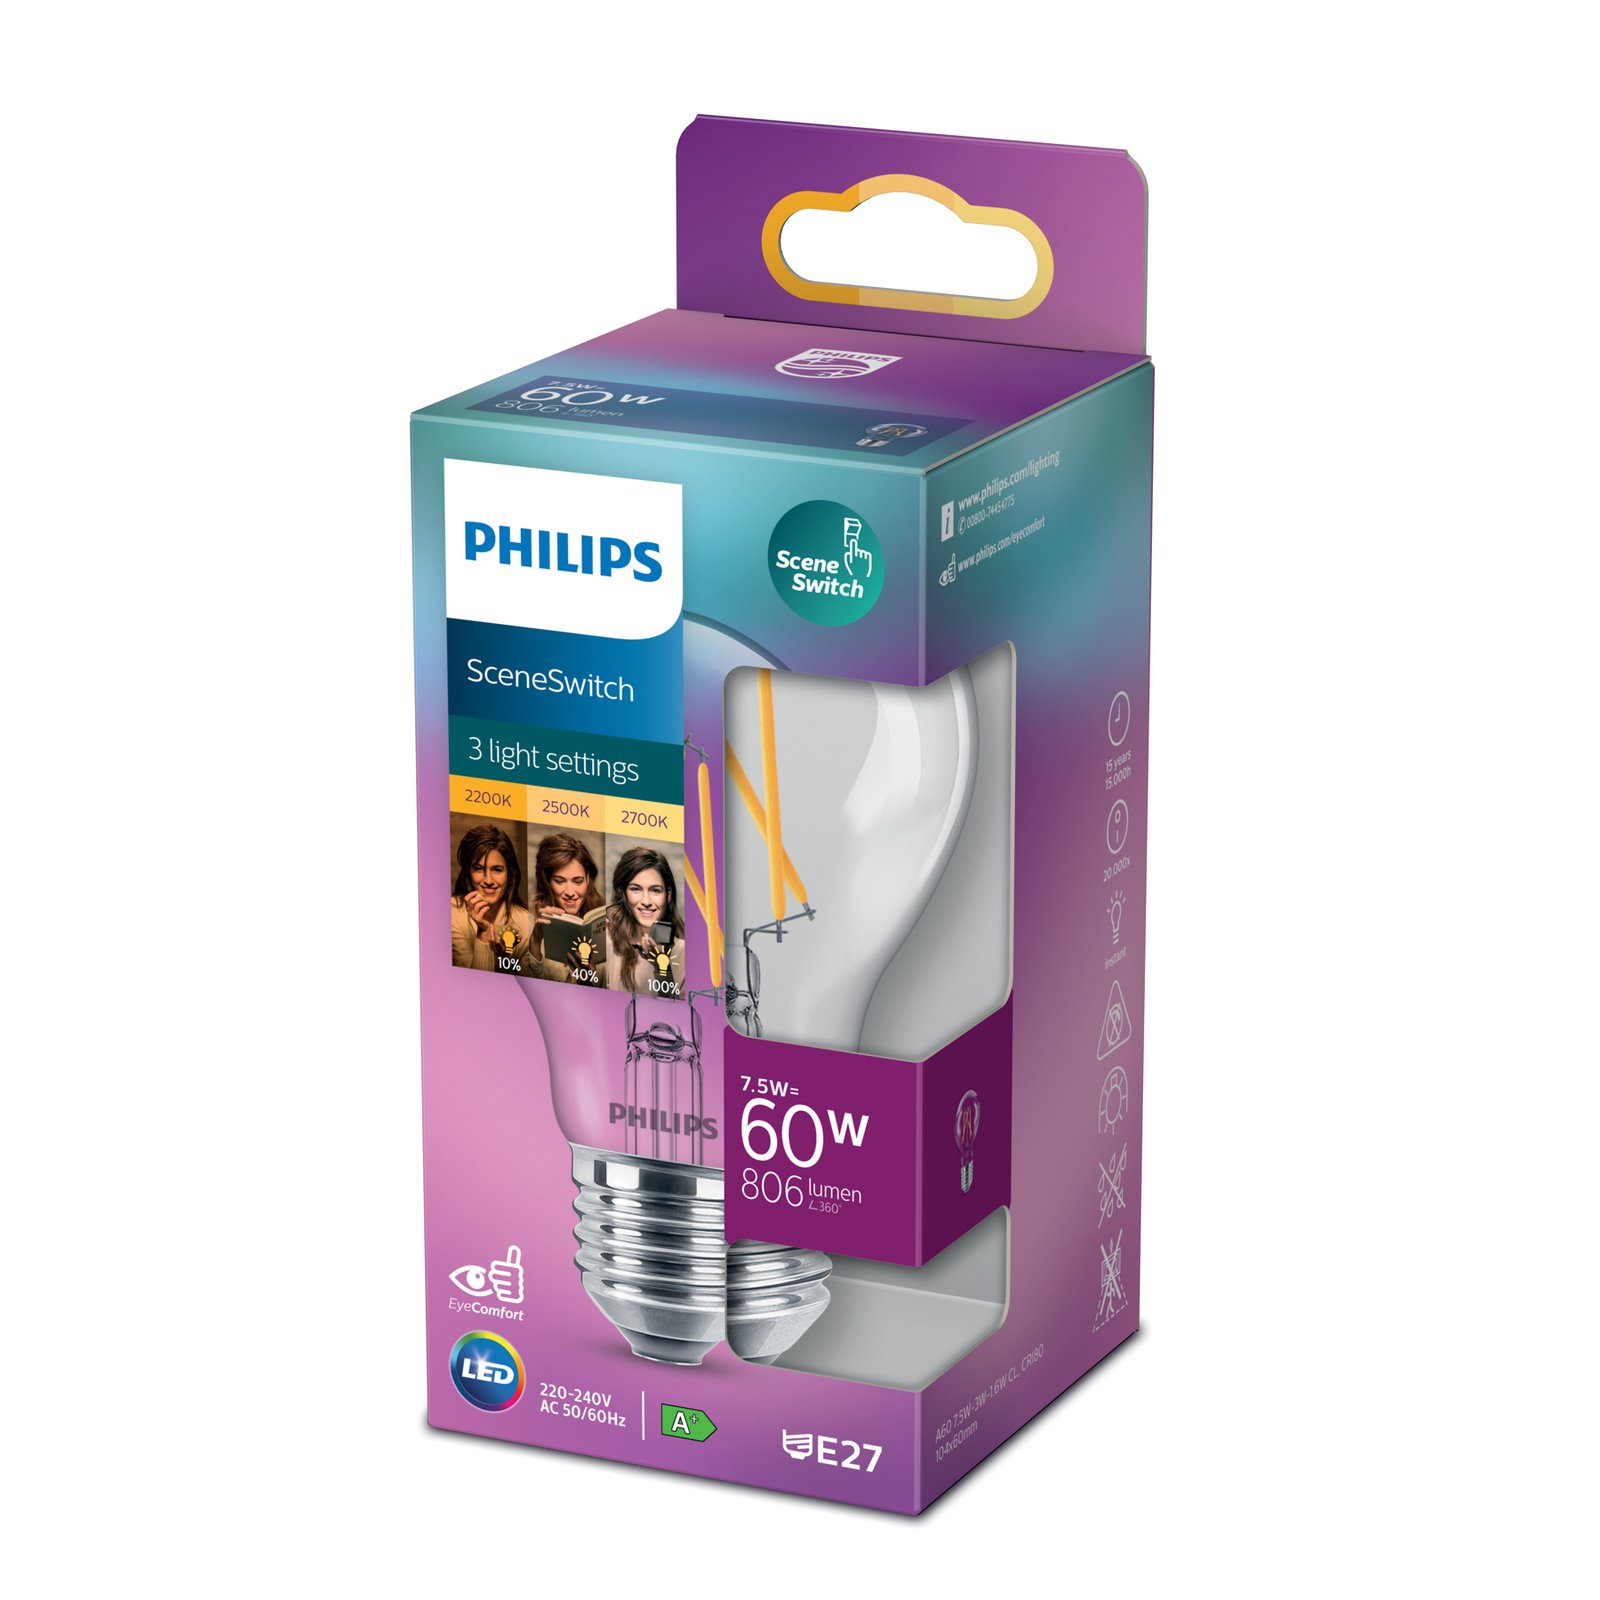 Philips SceneSwitch E27 lâmpada LED 7.5W Filamento